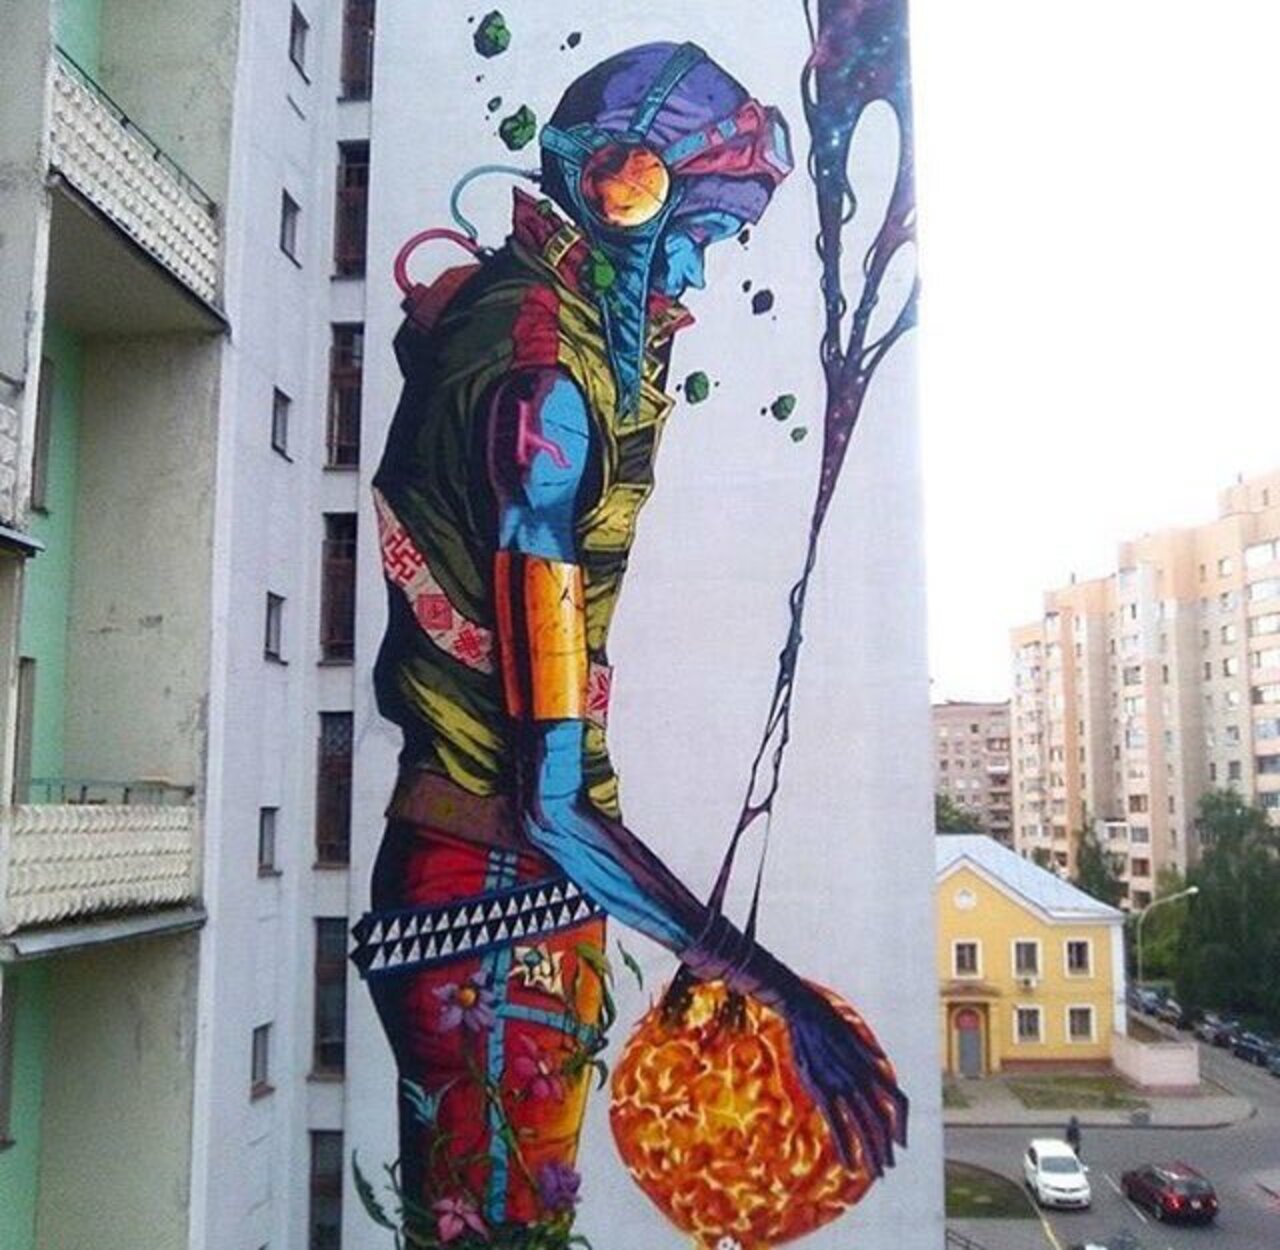 This is too dope.More streetart by Deih Belarus#mural #streetart #graffiti #art https://t.co/AfL37aGGFB